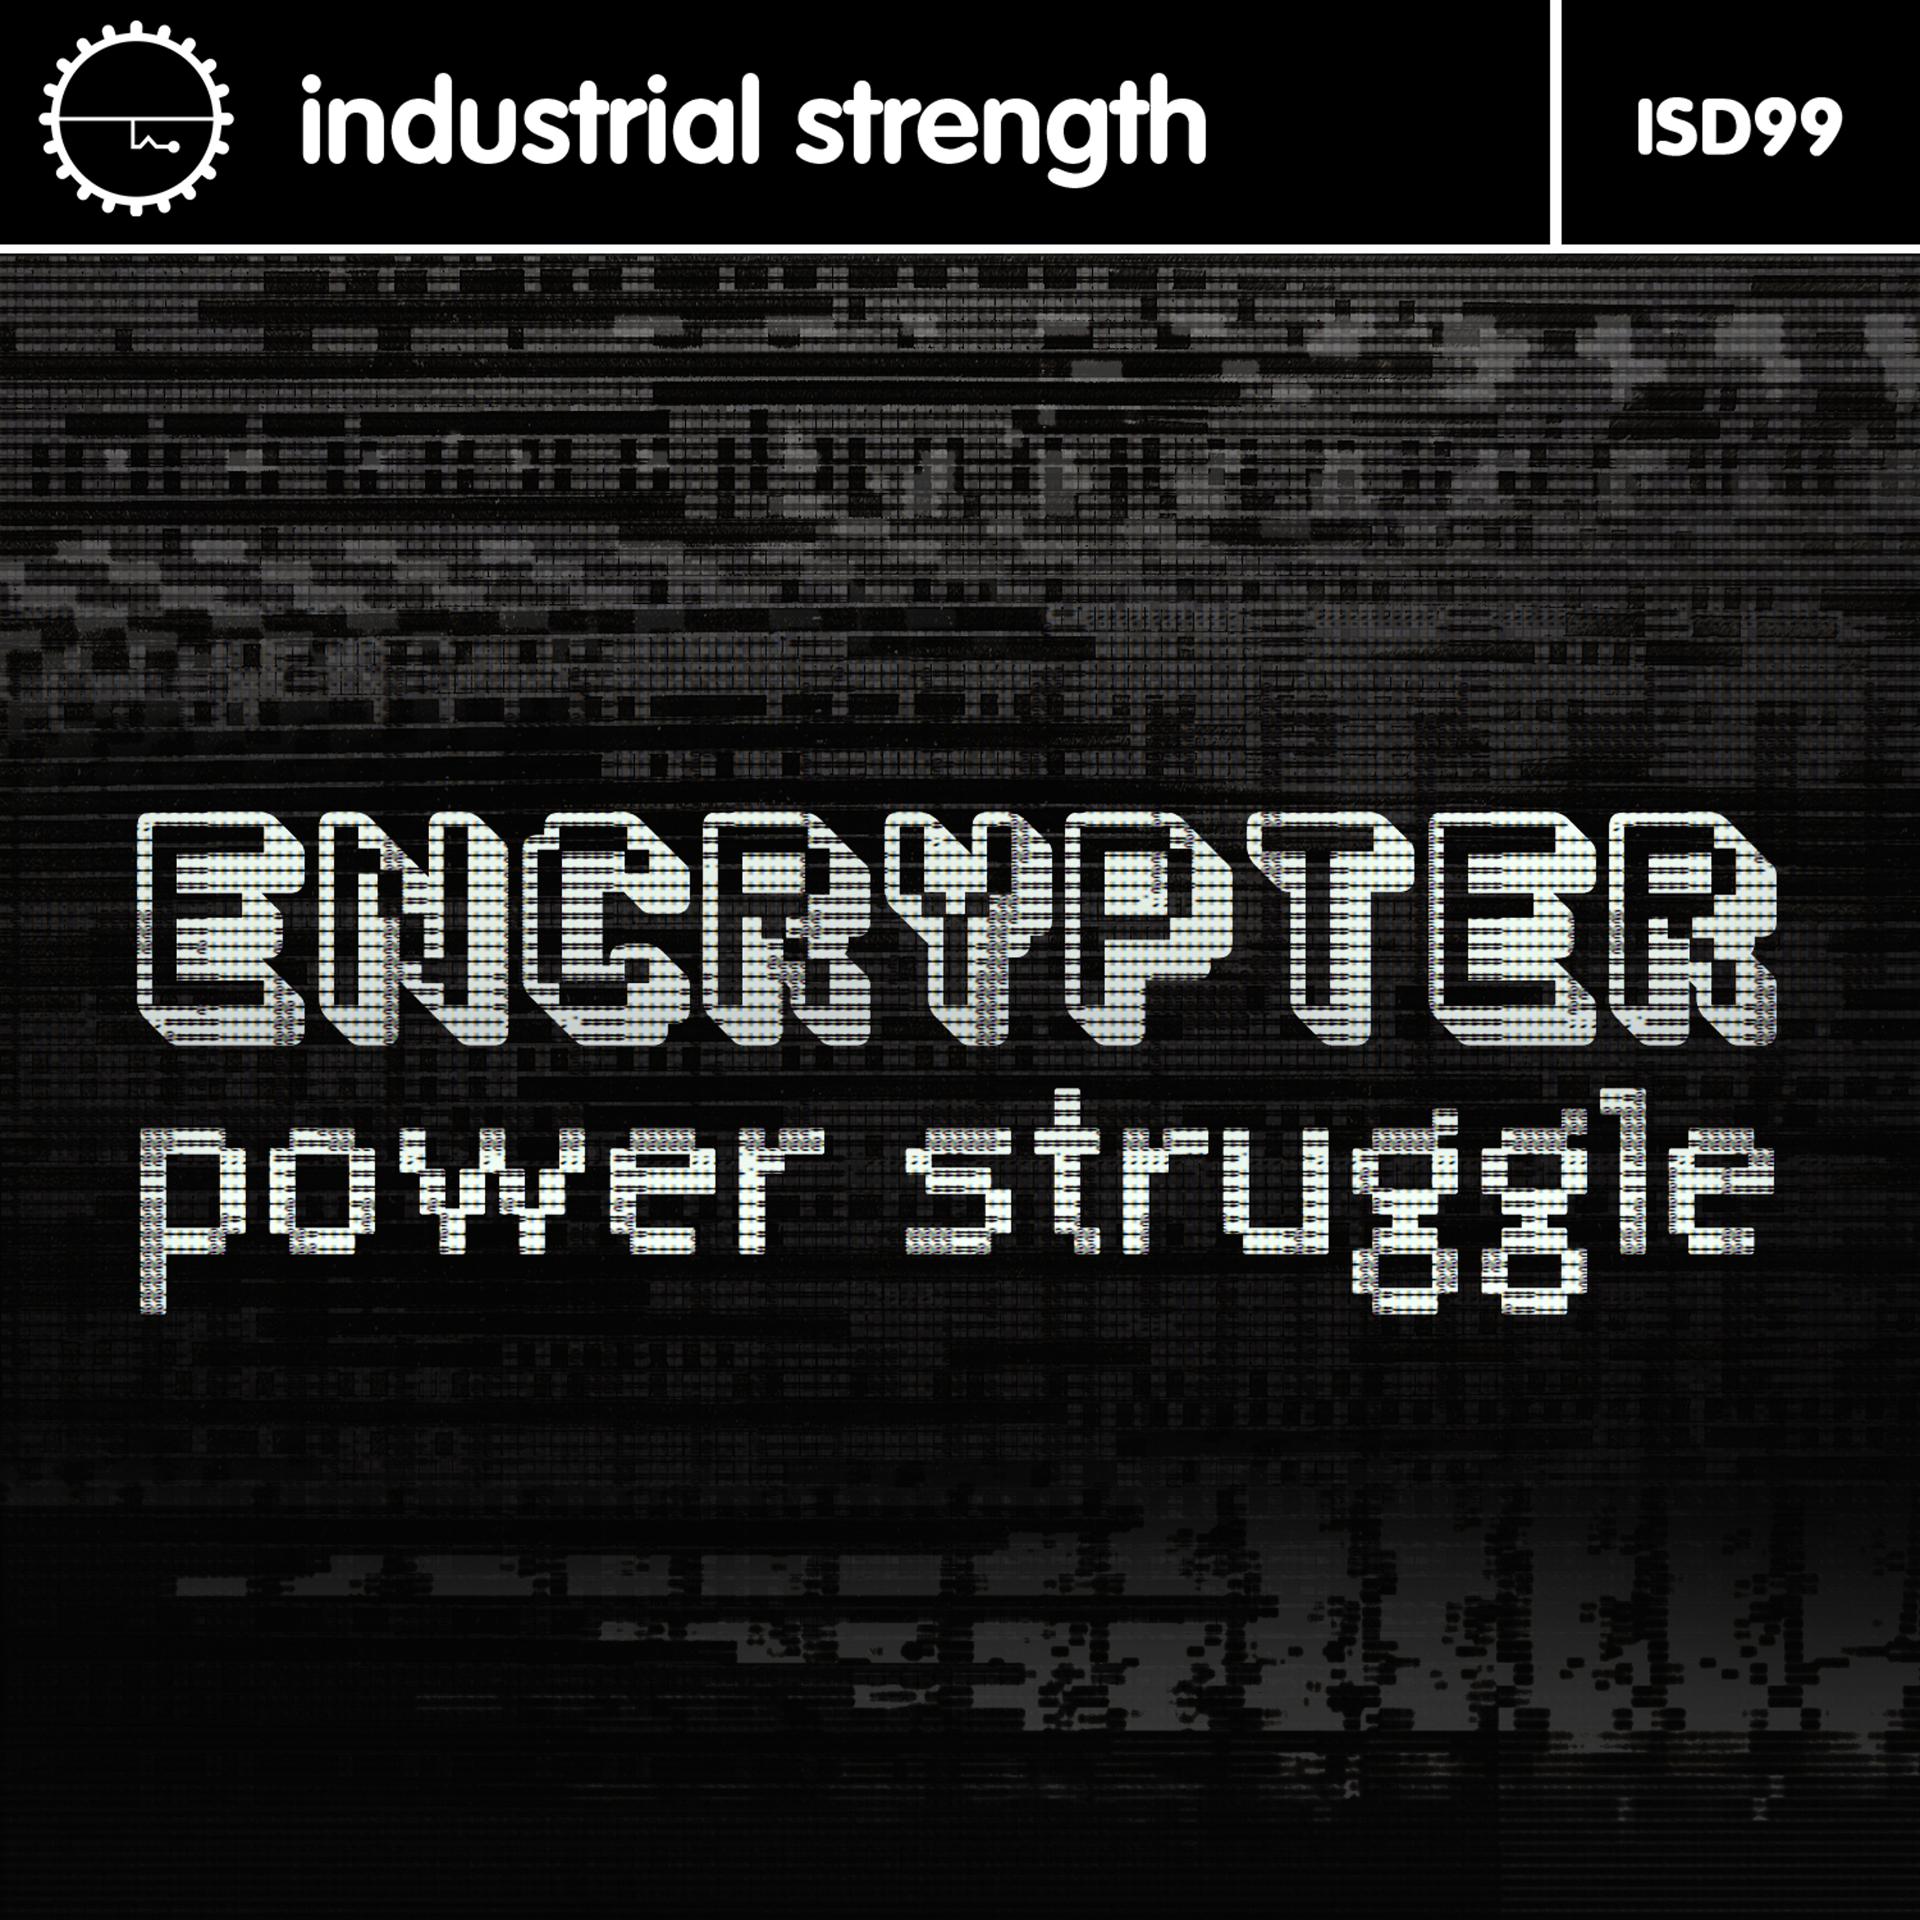 Постер альбома Power Struggle